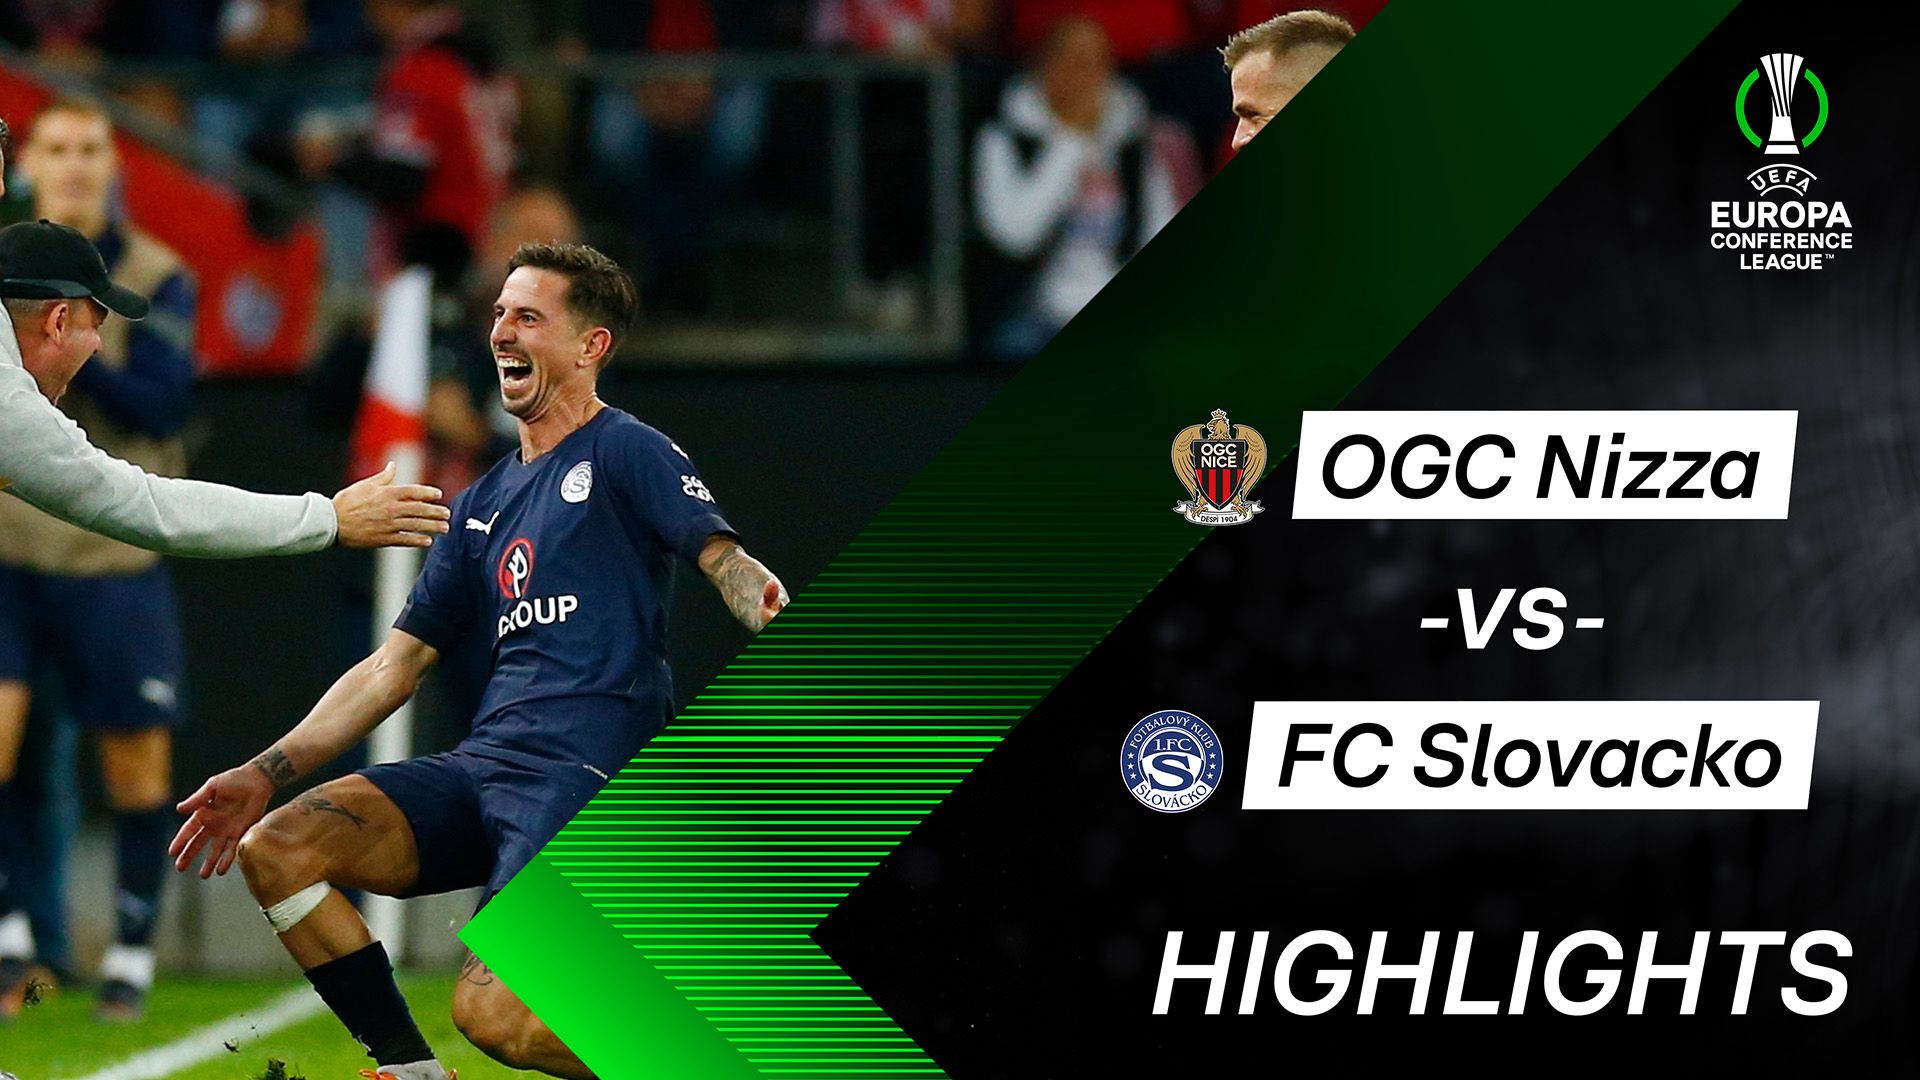 Highlights: OGC Nizza vs. FC Slovacko